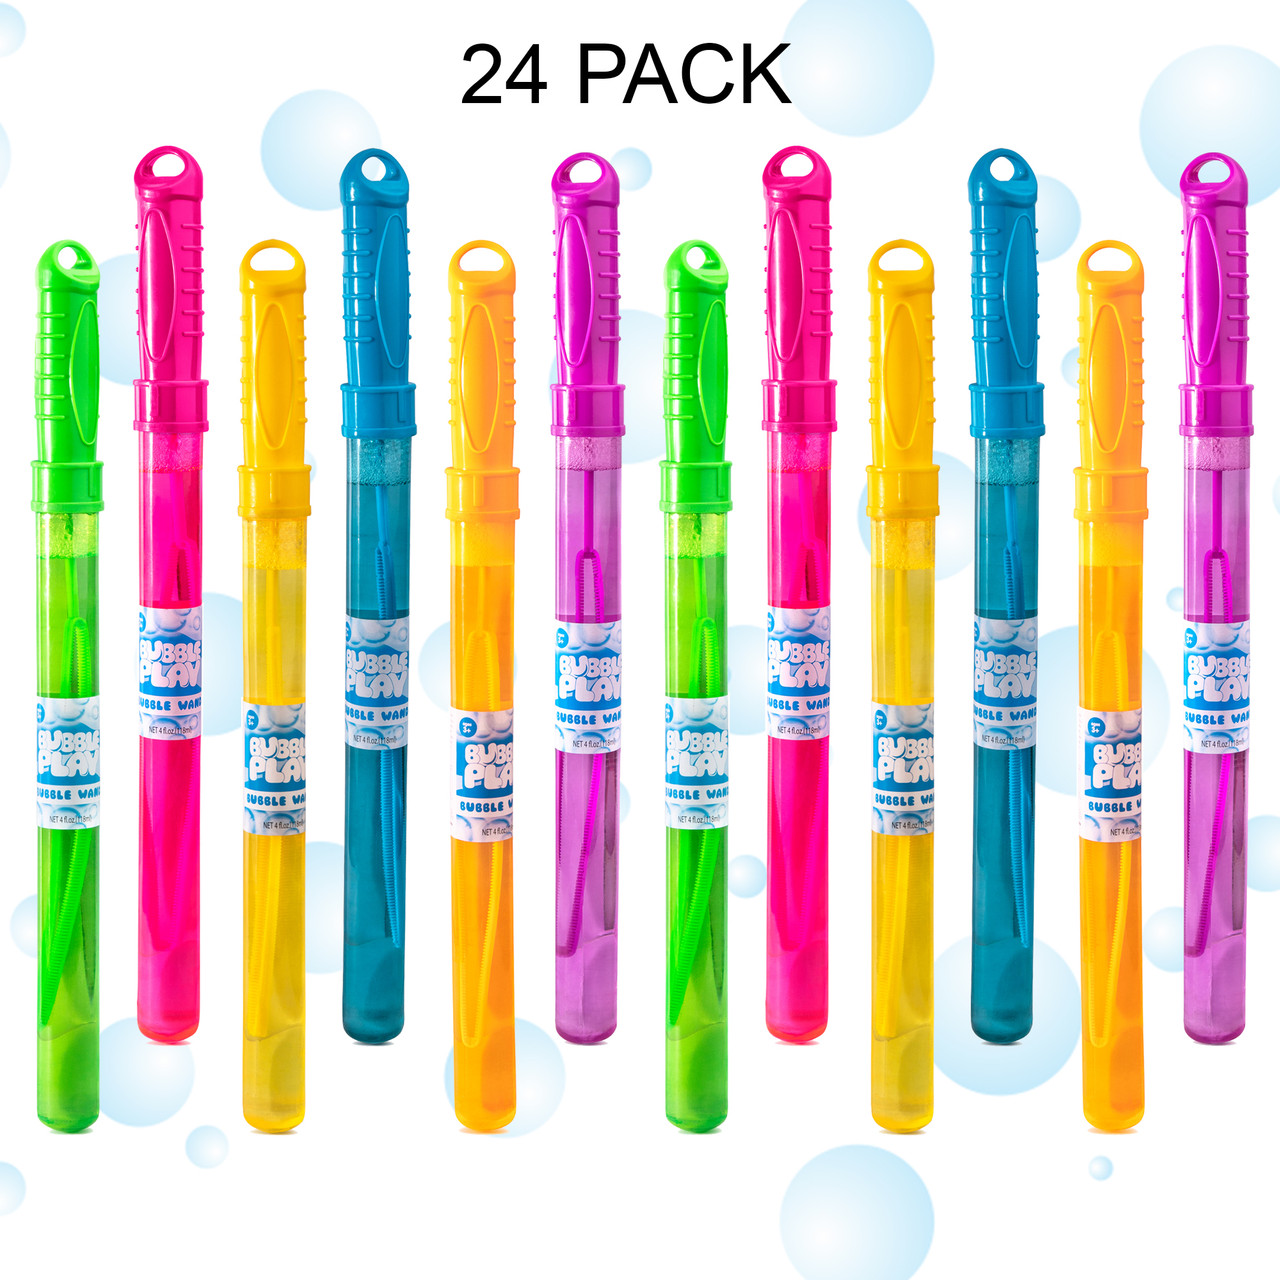 Mini Bubble Wands, 4 Inch, 16 Pack, Colorful Mini Bubbles Party Favors for  Kids, Party Favors Bubbles - Mr. Pen Store